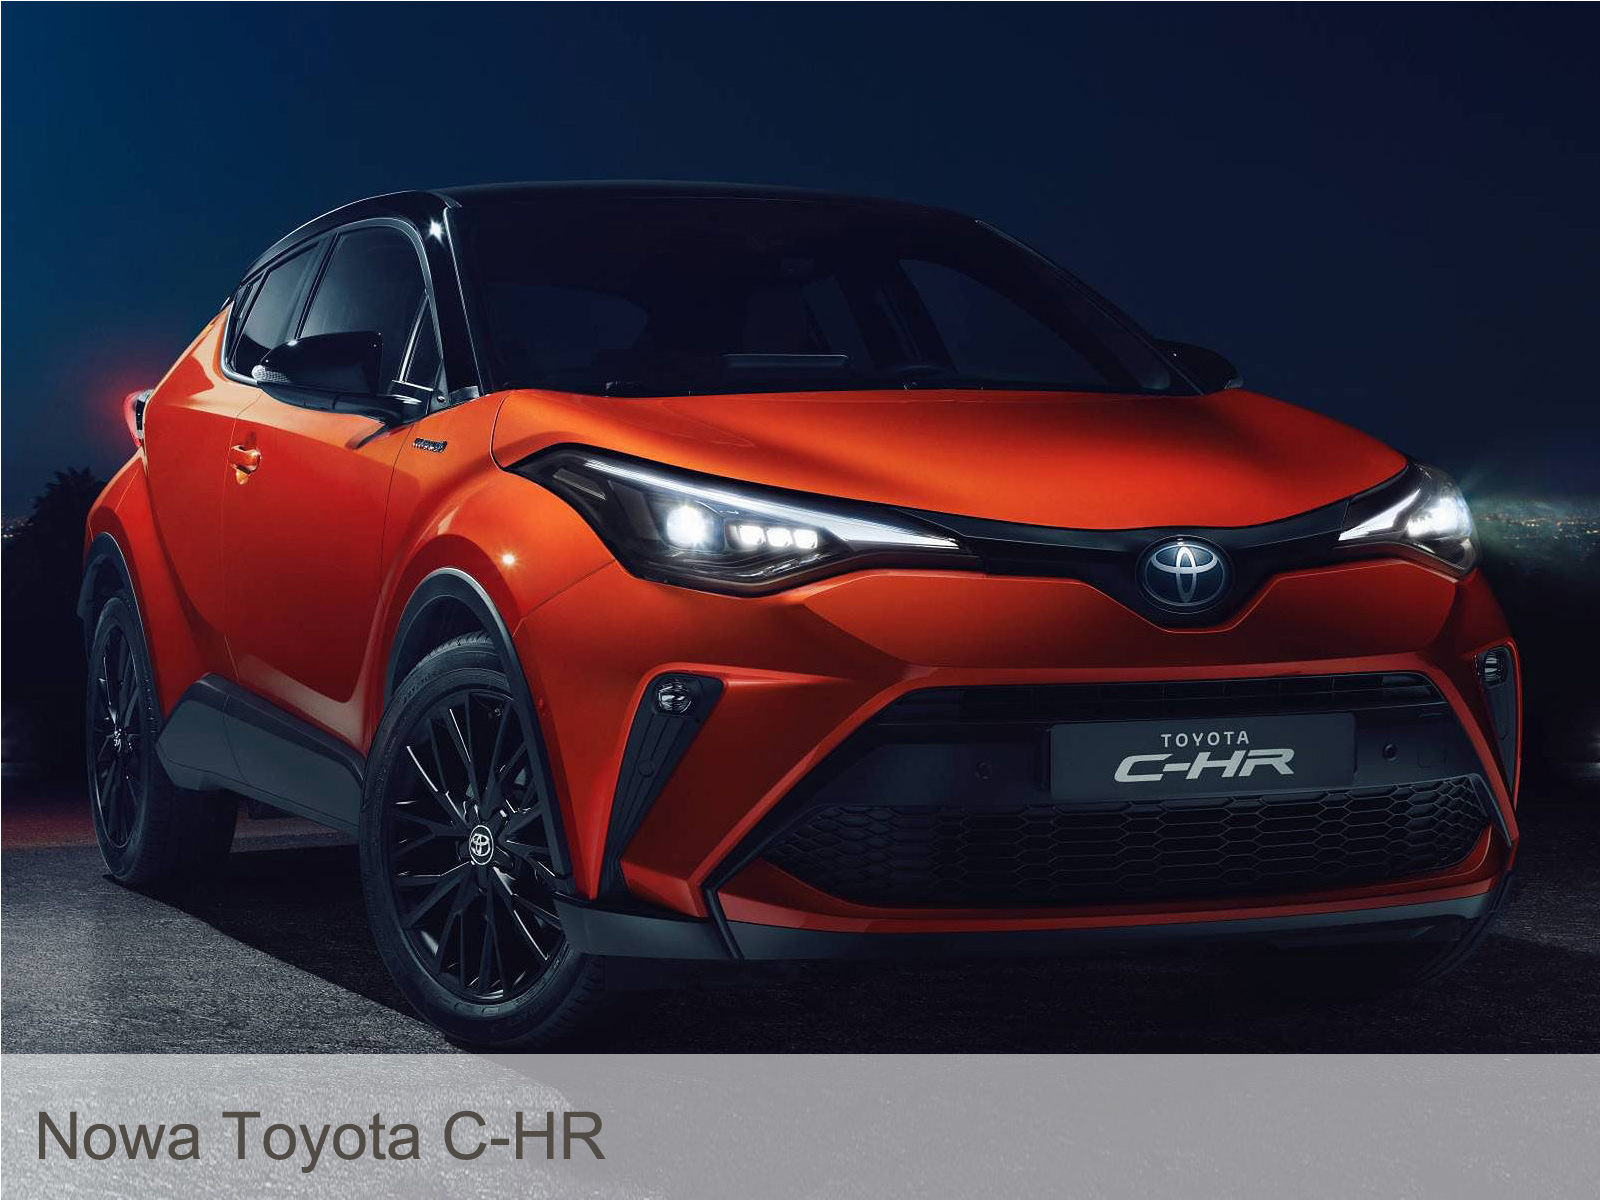 Nowa-Toyota-C-HR